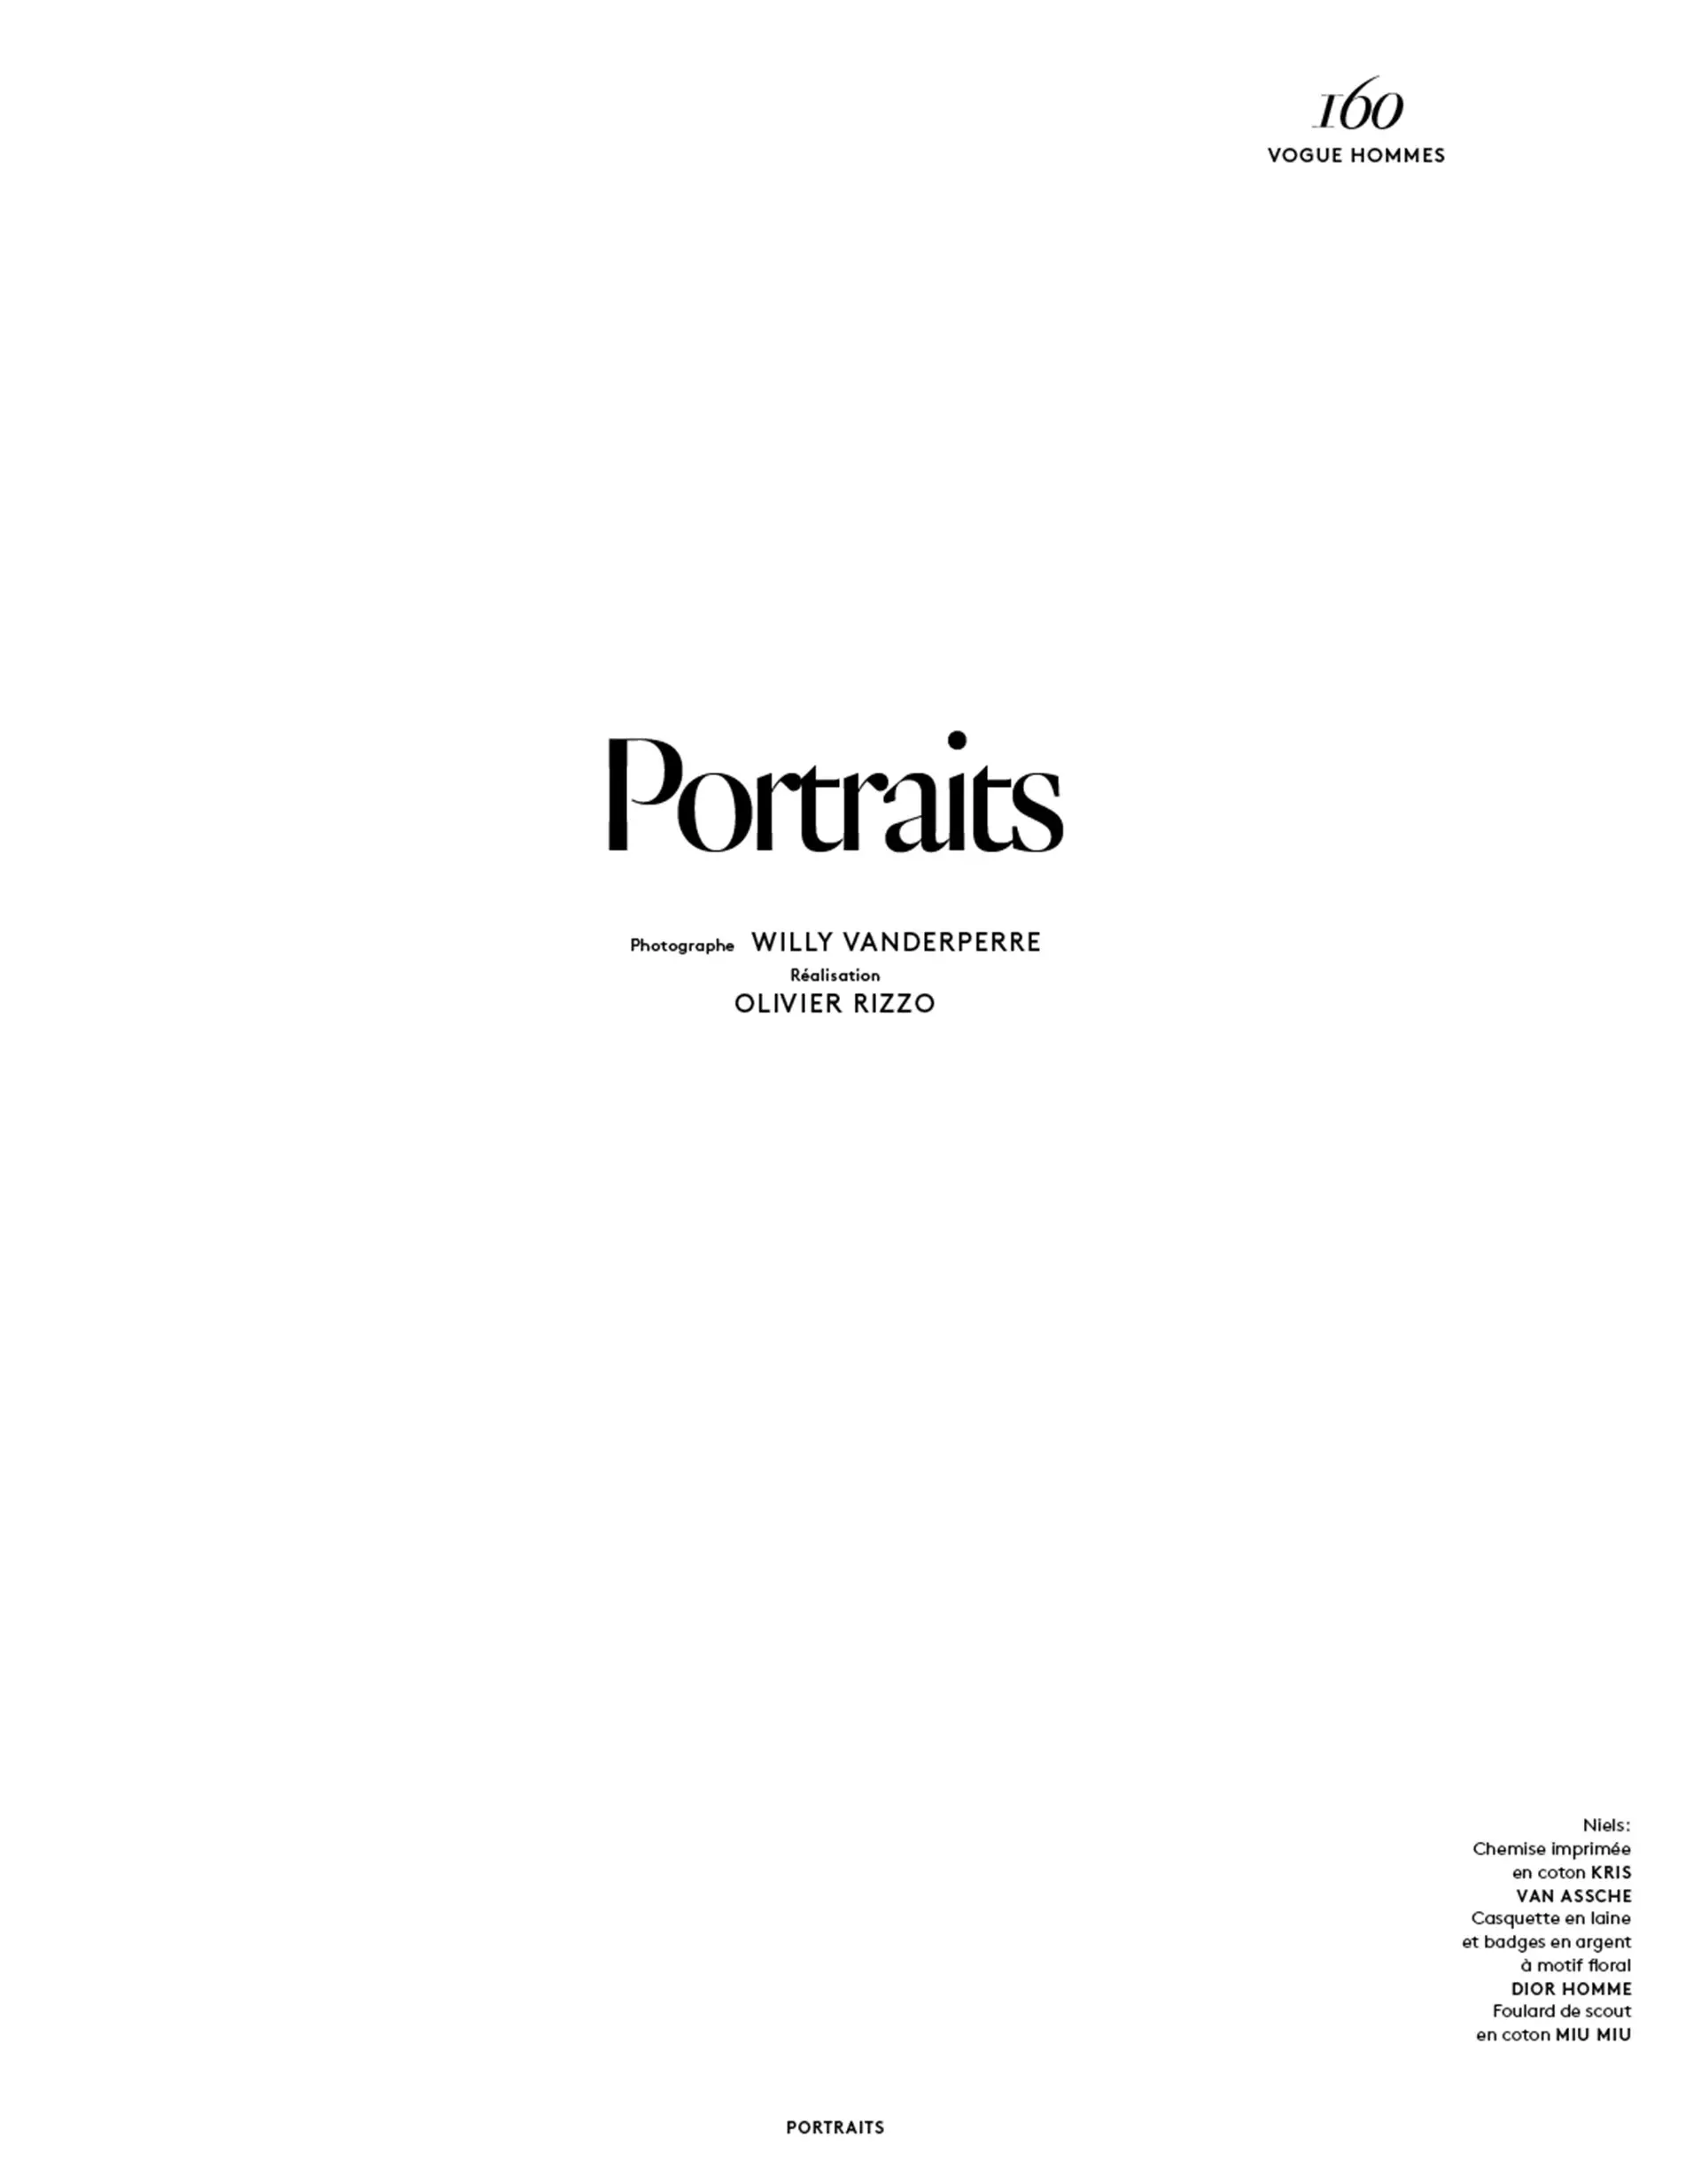 Vogue Hommes International S/S 2015: Портрети